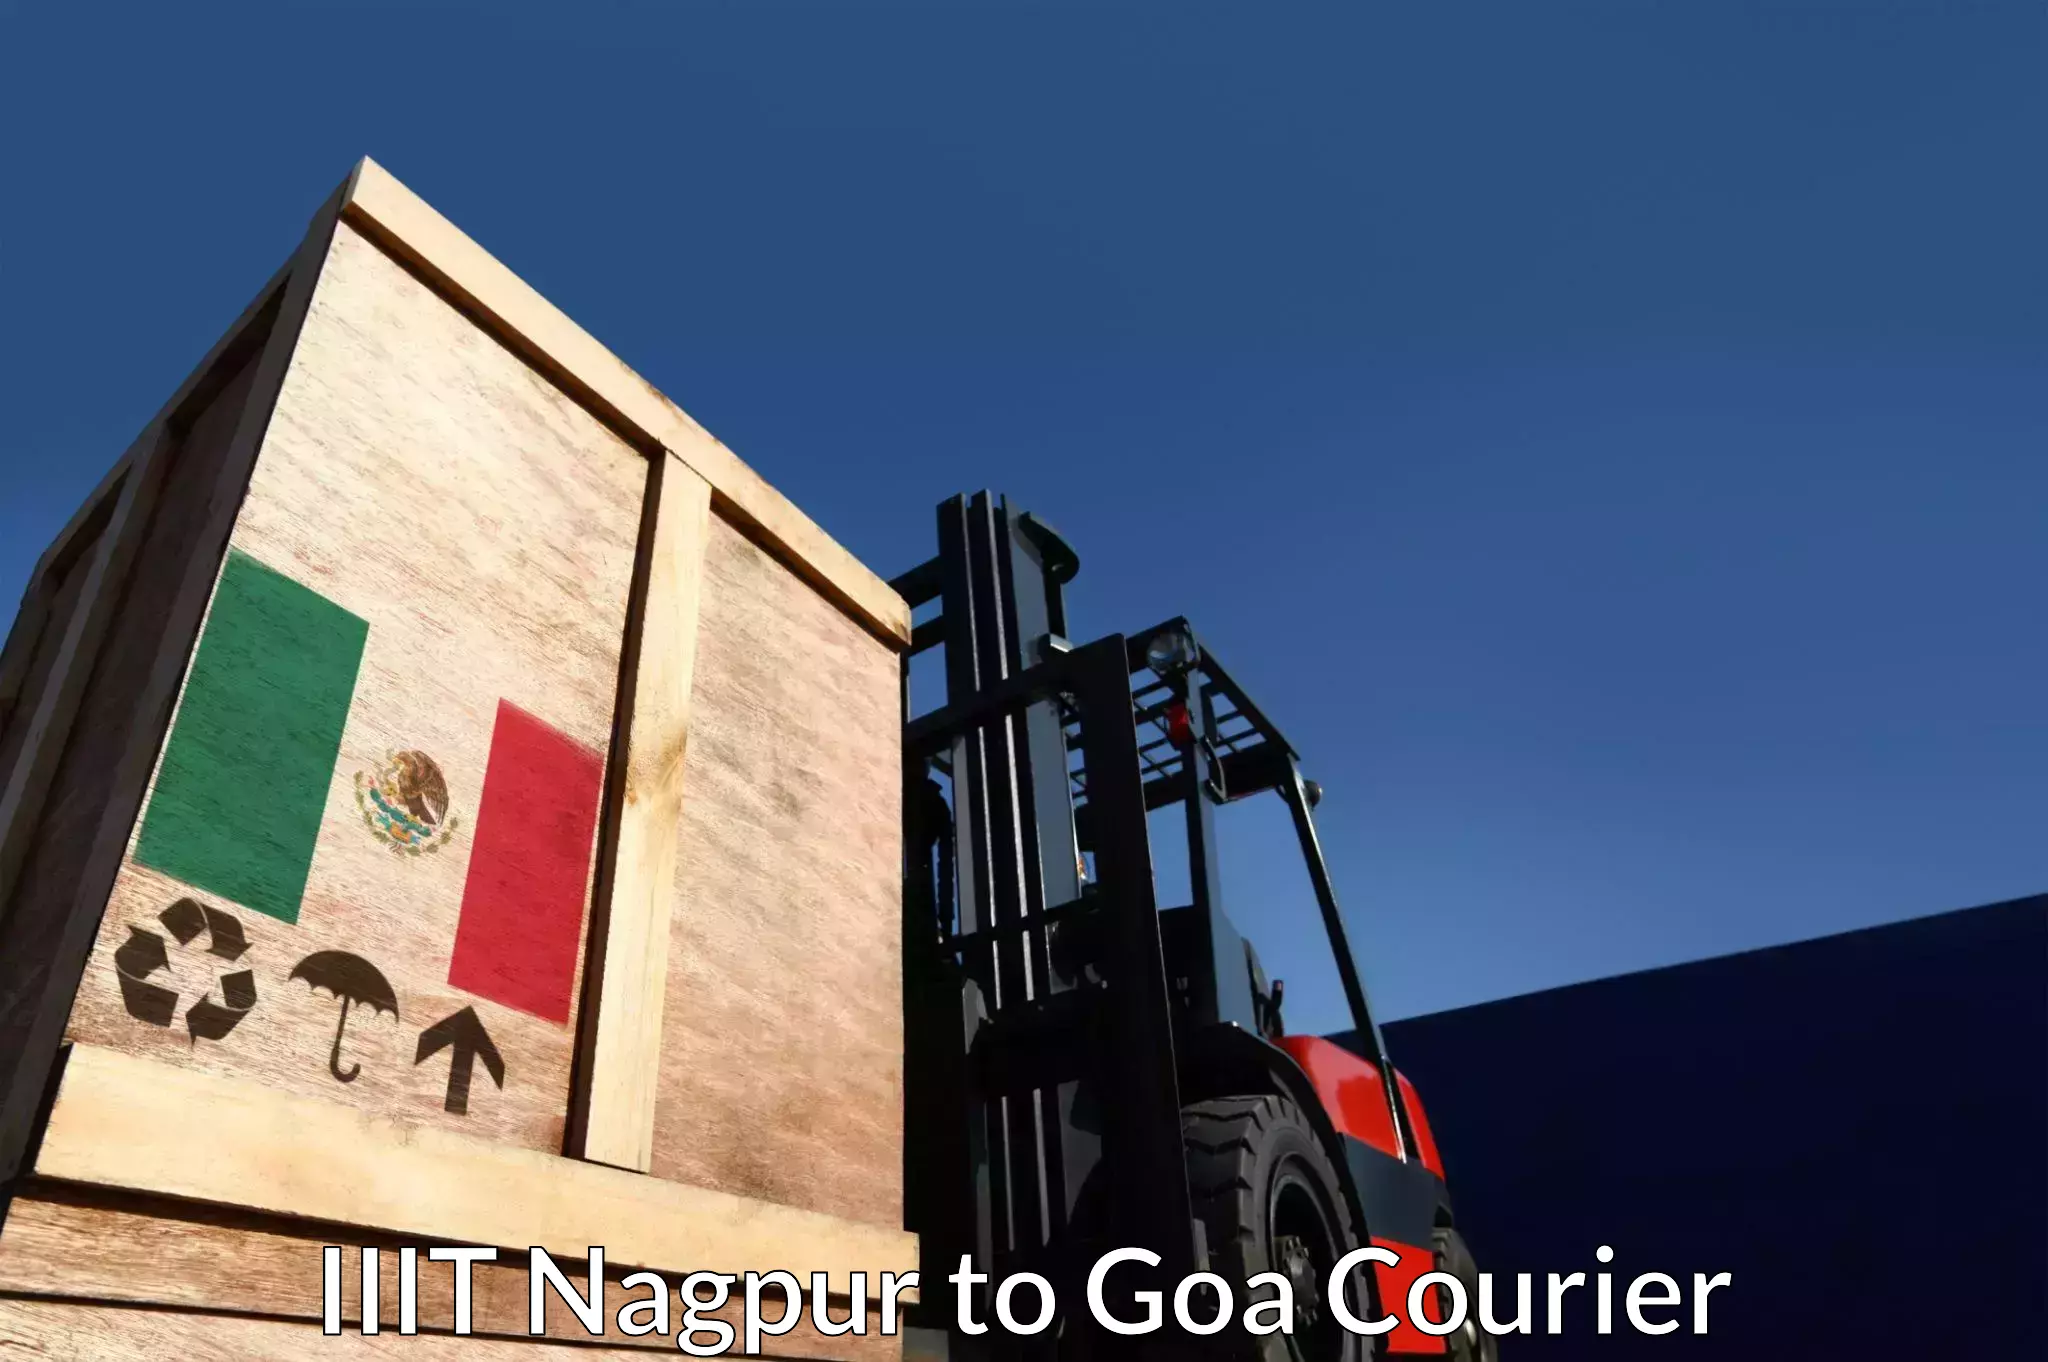 Courier service partnerships IIIT Nagpur to Goa